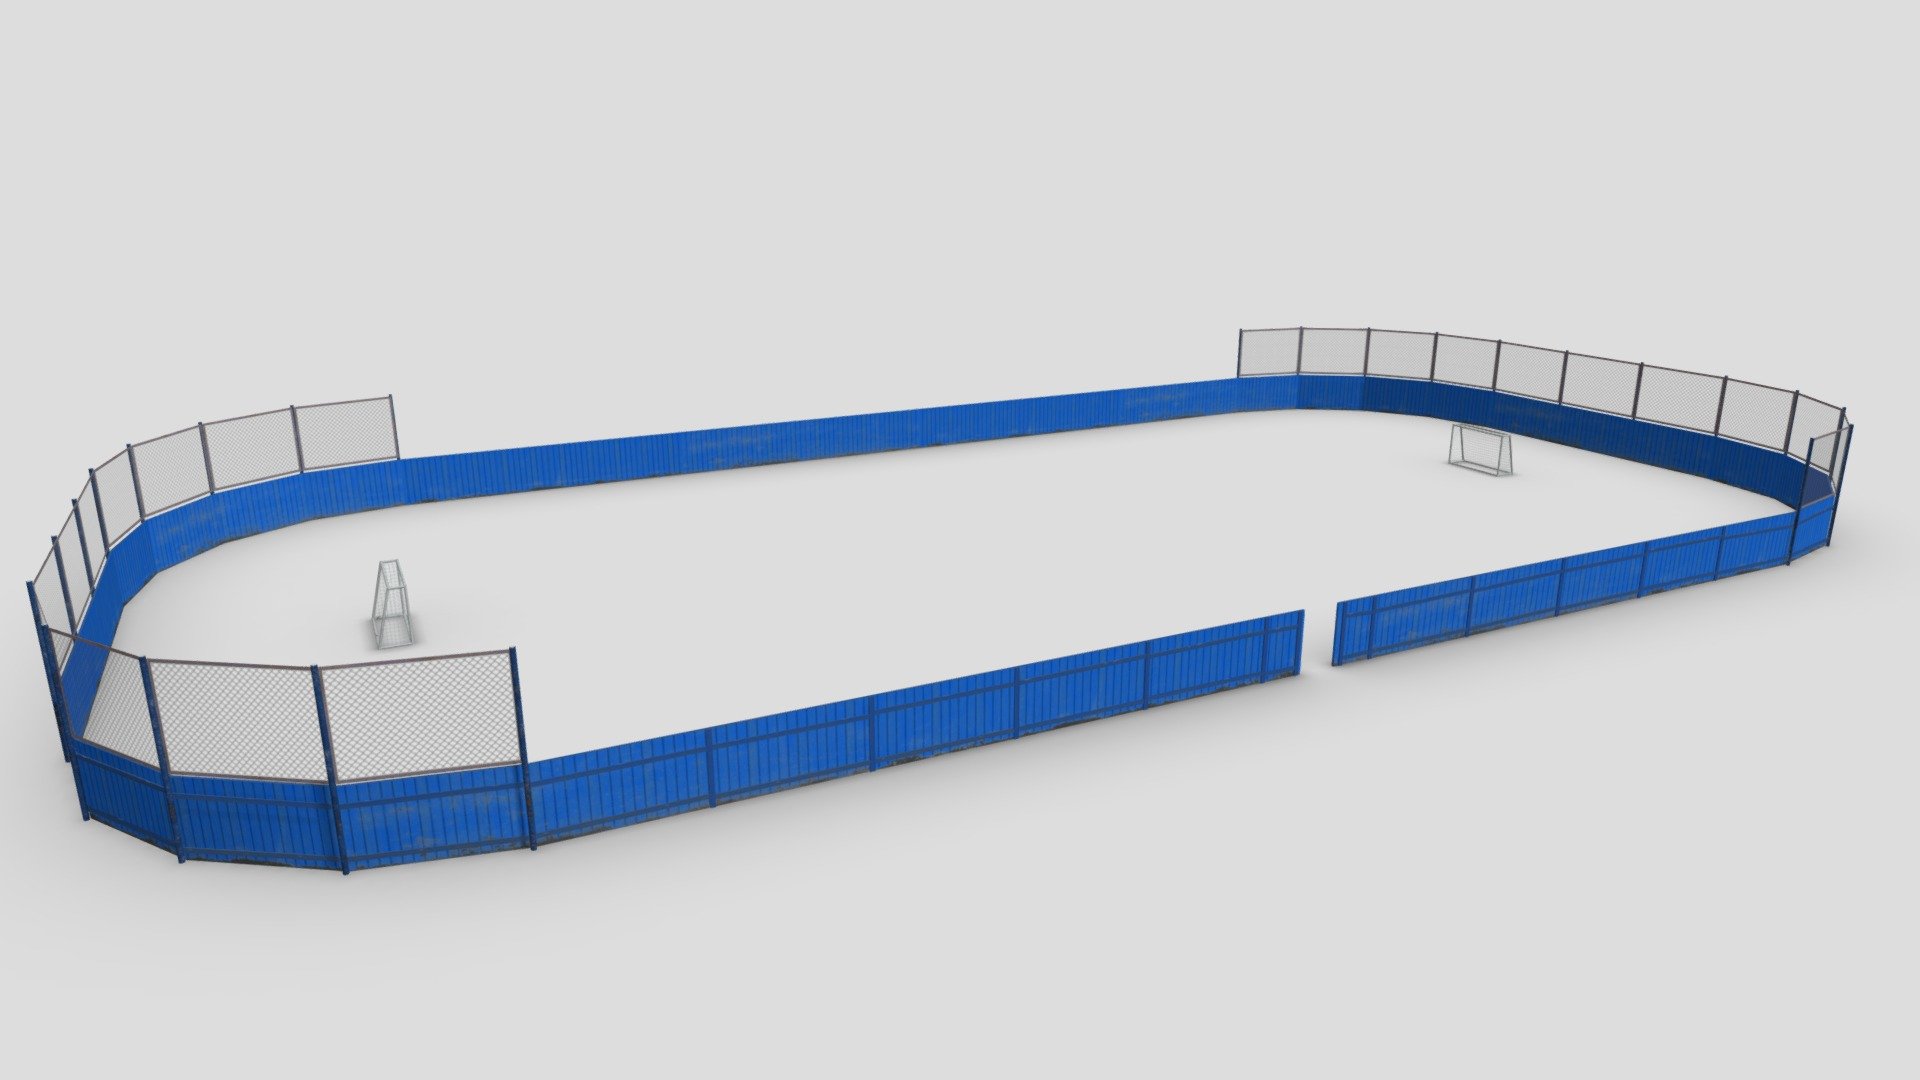 Street hockey arena for playing hockey/football - Street hockey arena - 3D model by andreyd3 3d model